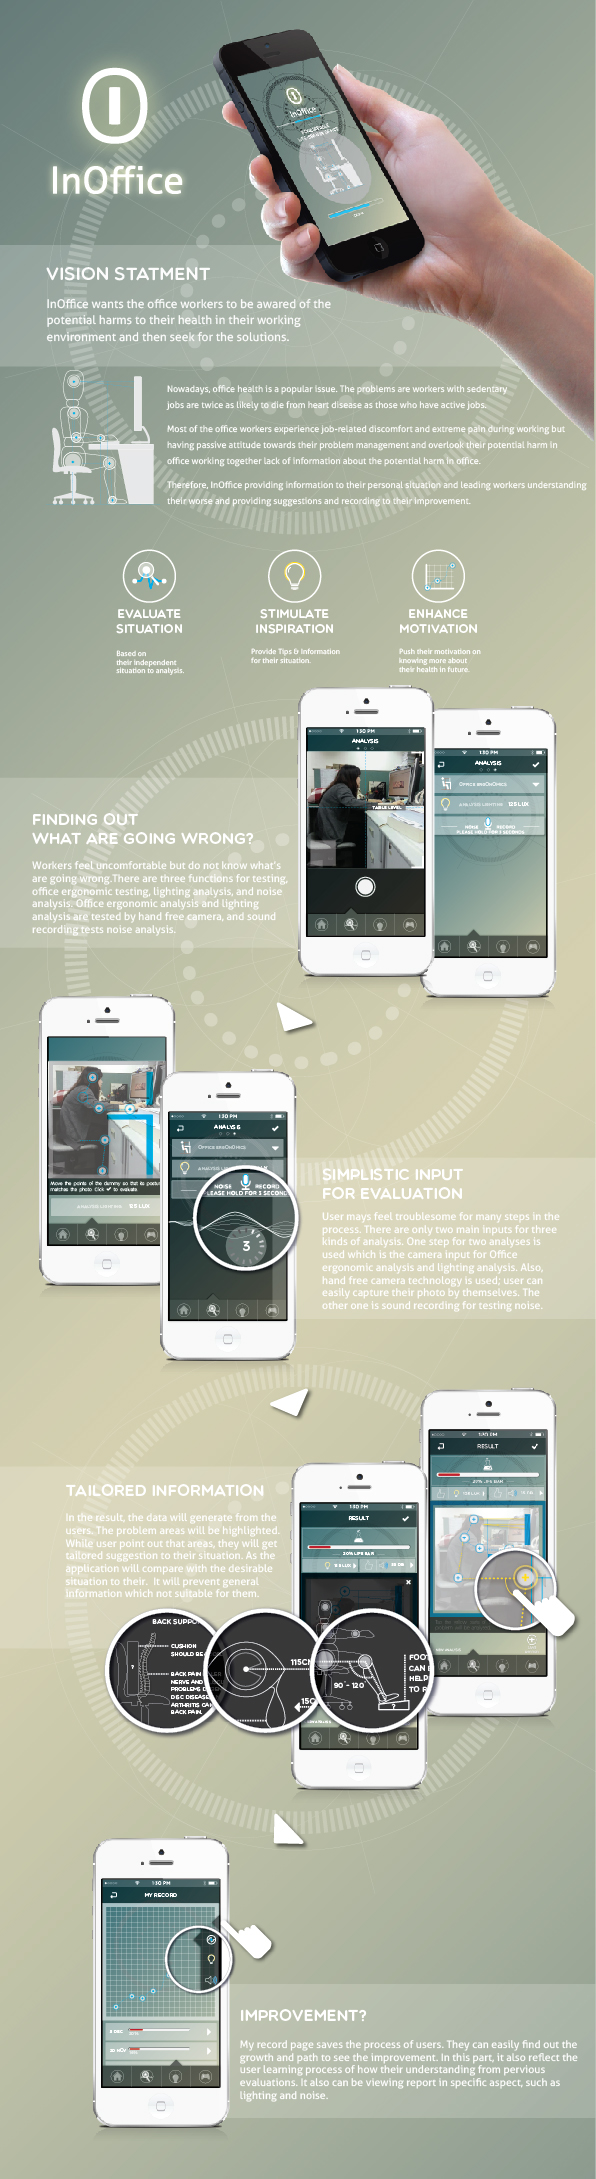 InOffice - mobile application design